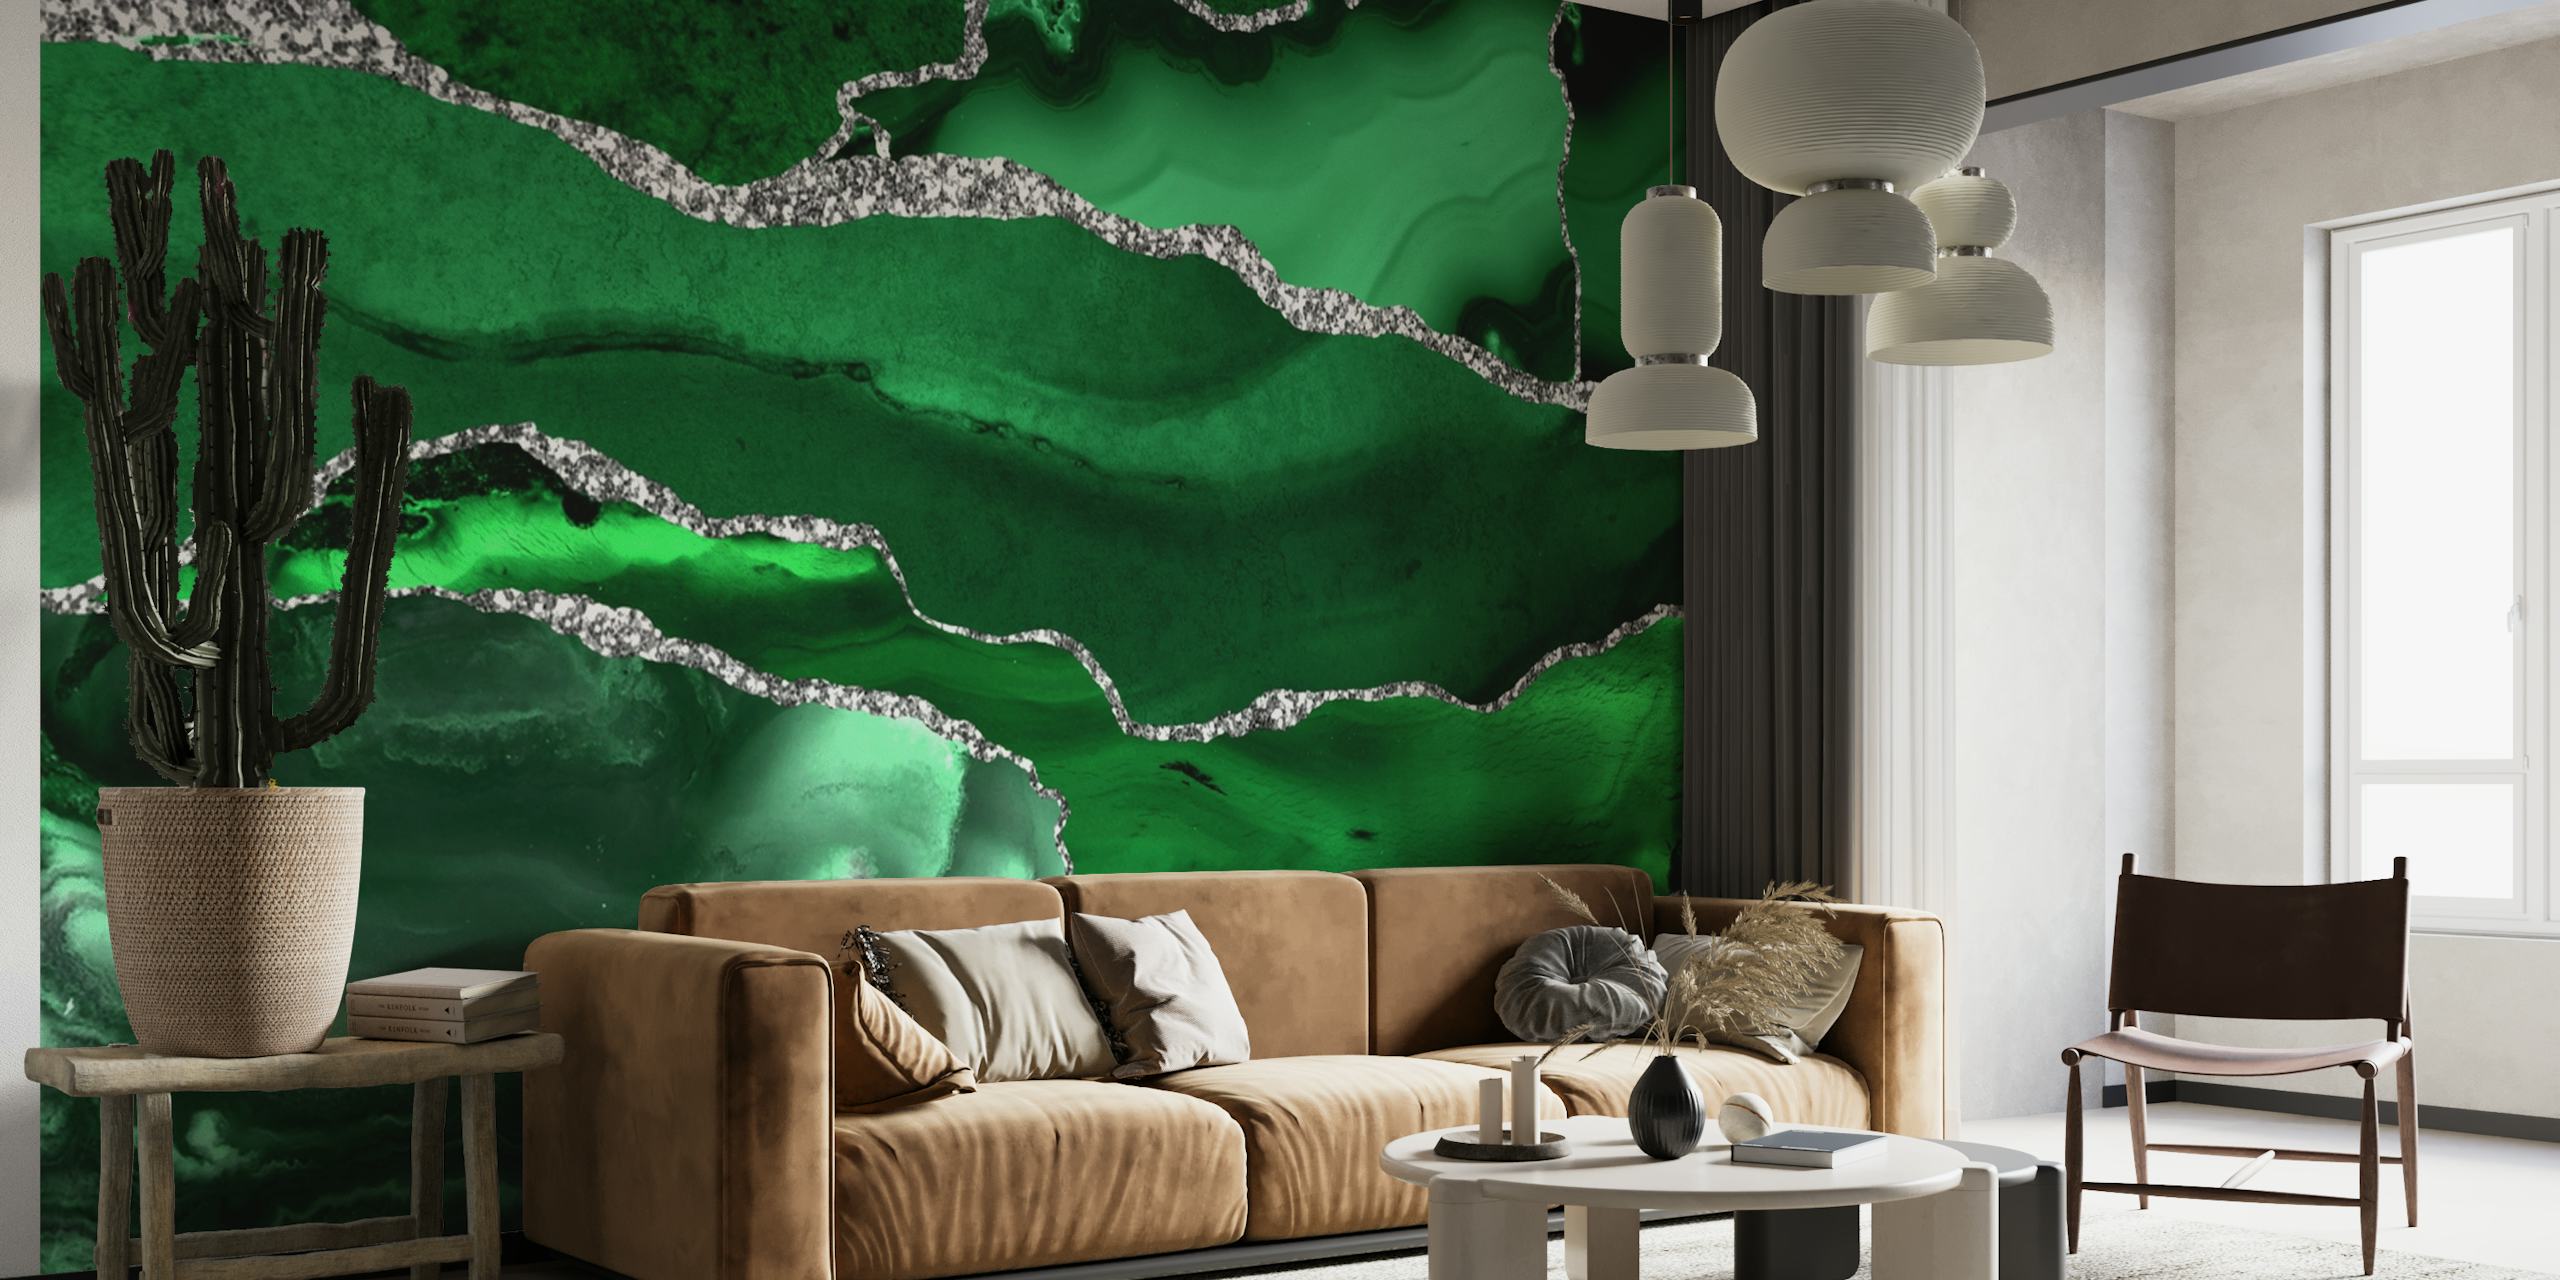 Wandgemälde aus smaragdgrünem Marmormosaik mit silbernen Adern